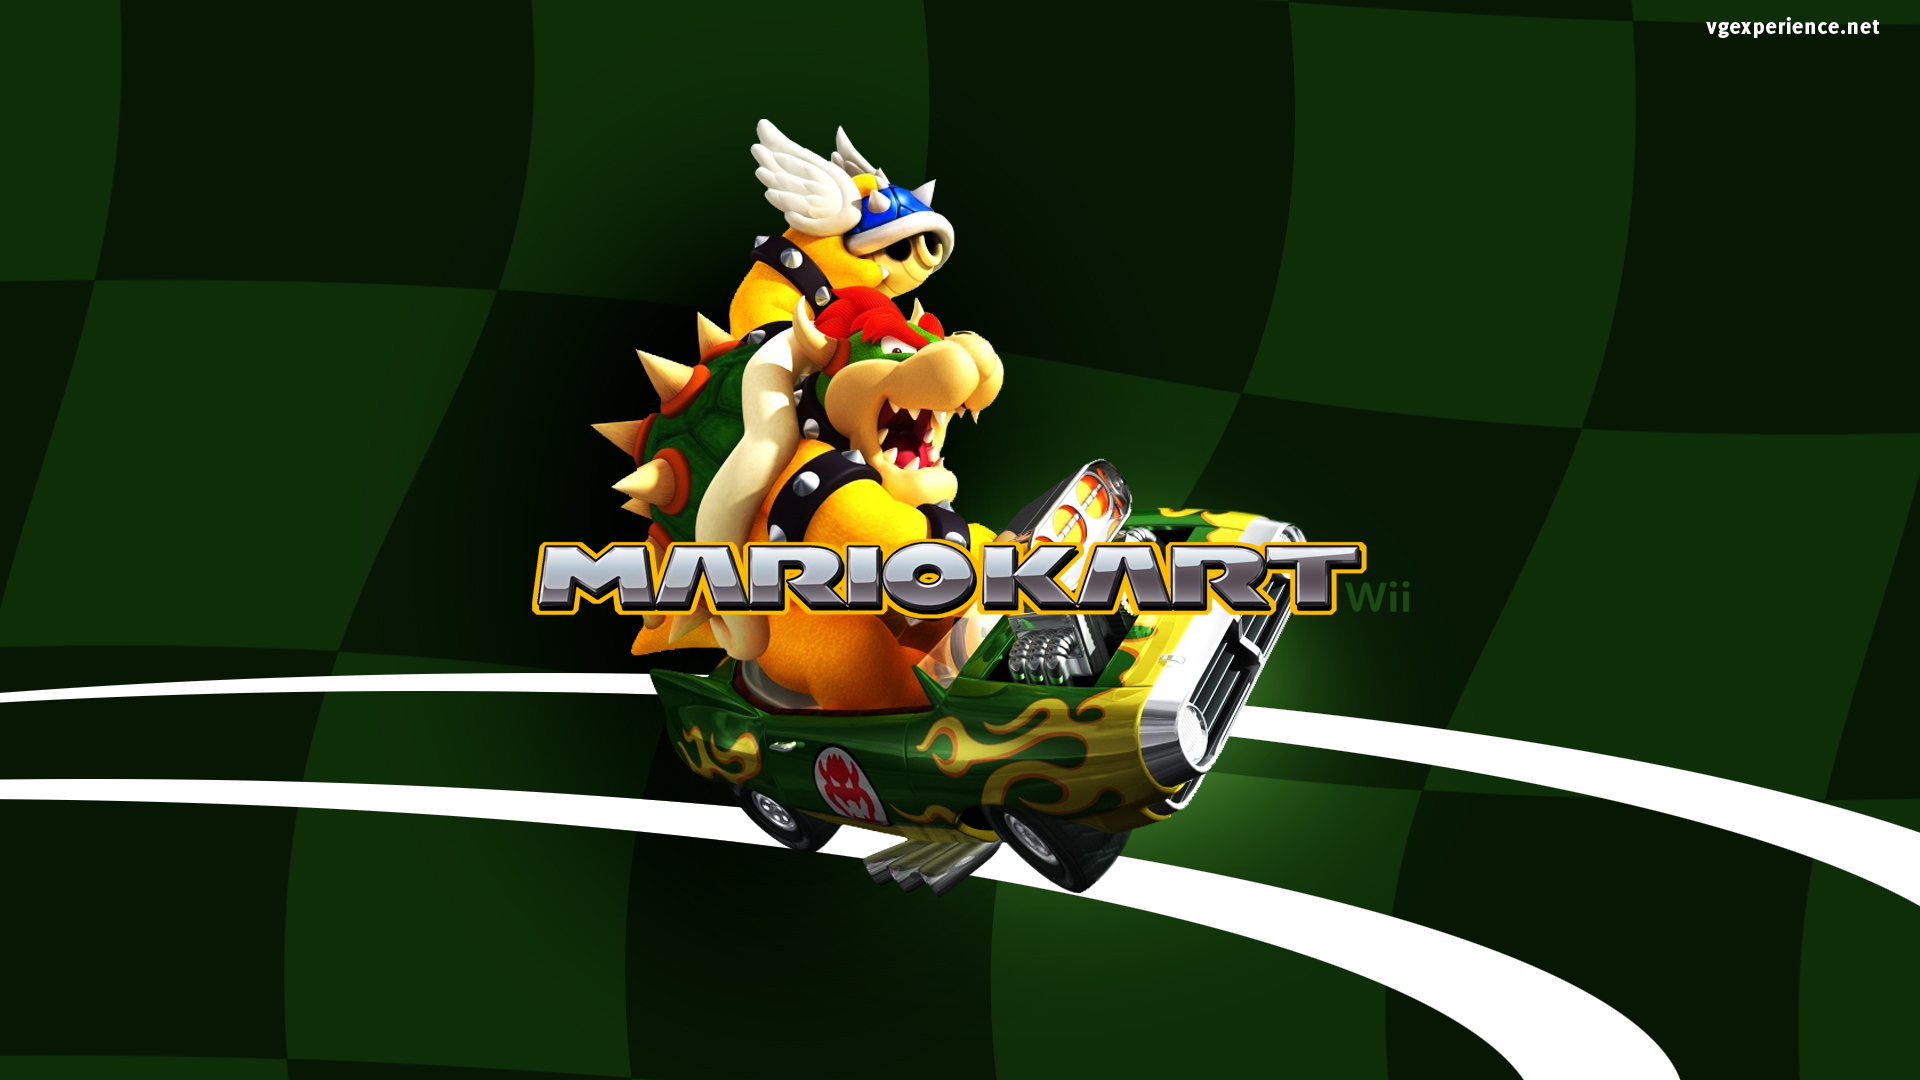 Mario Kart Wii Wallpaper Background